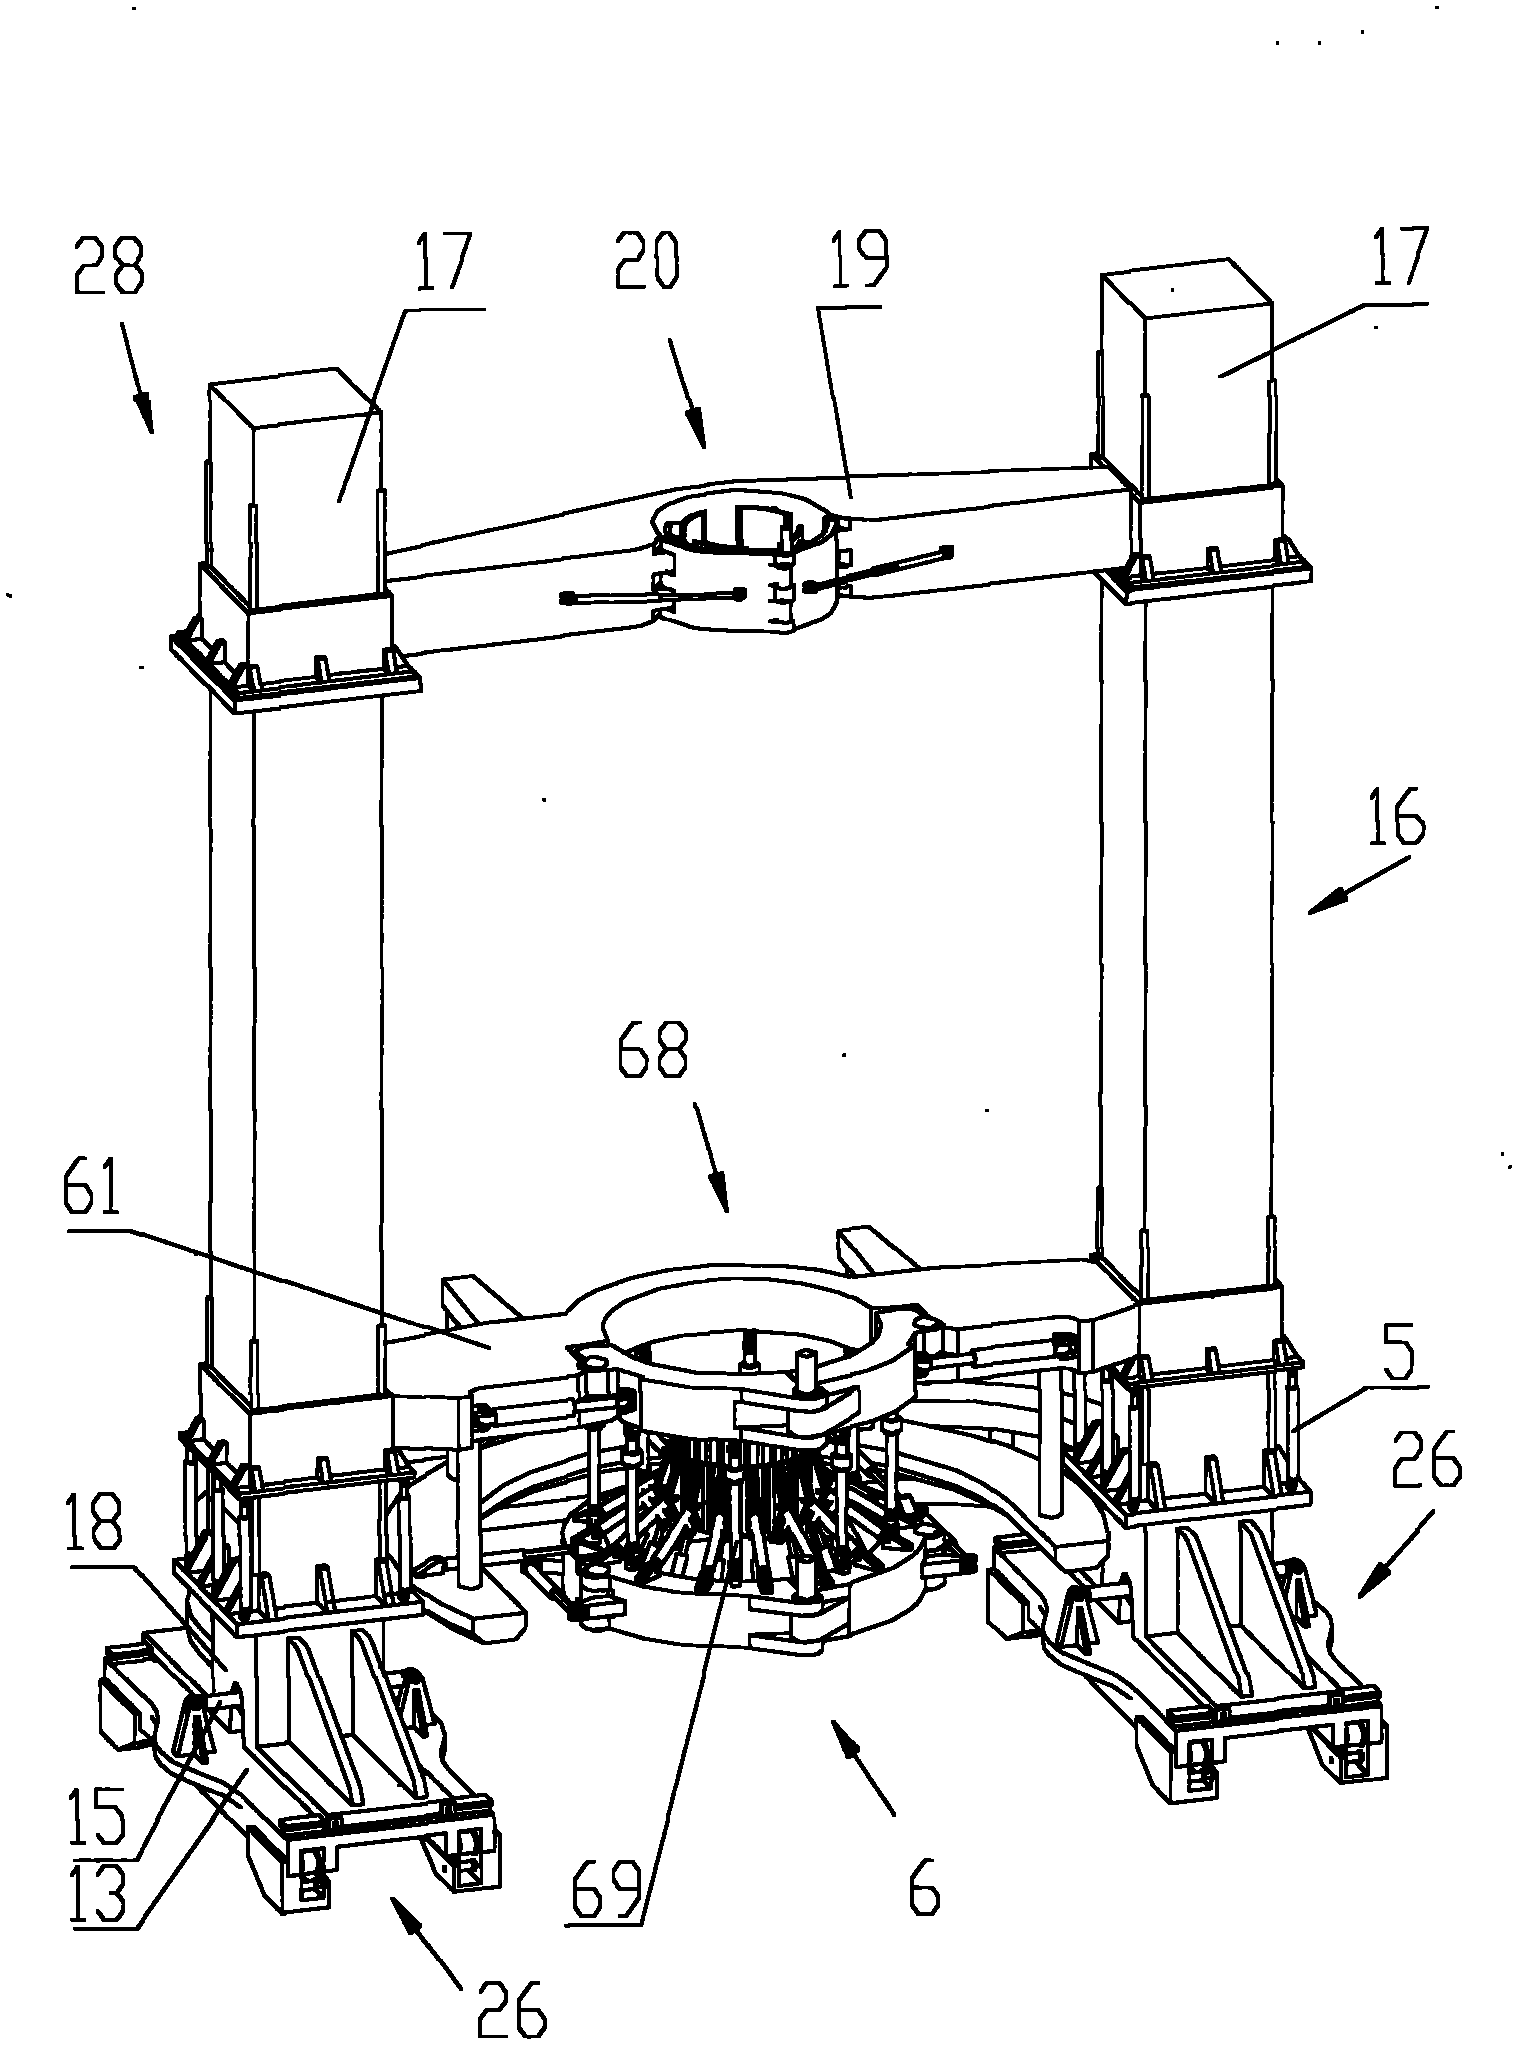 Fan integral installation rotating holding mechanism